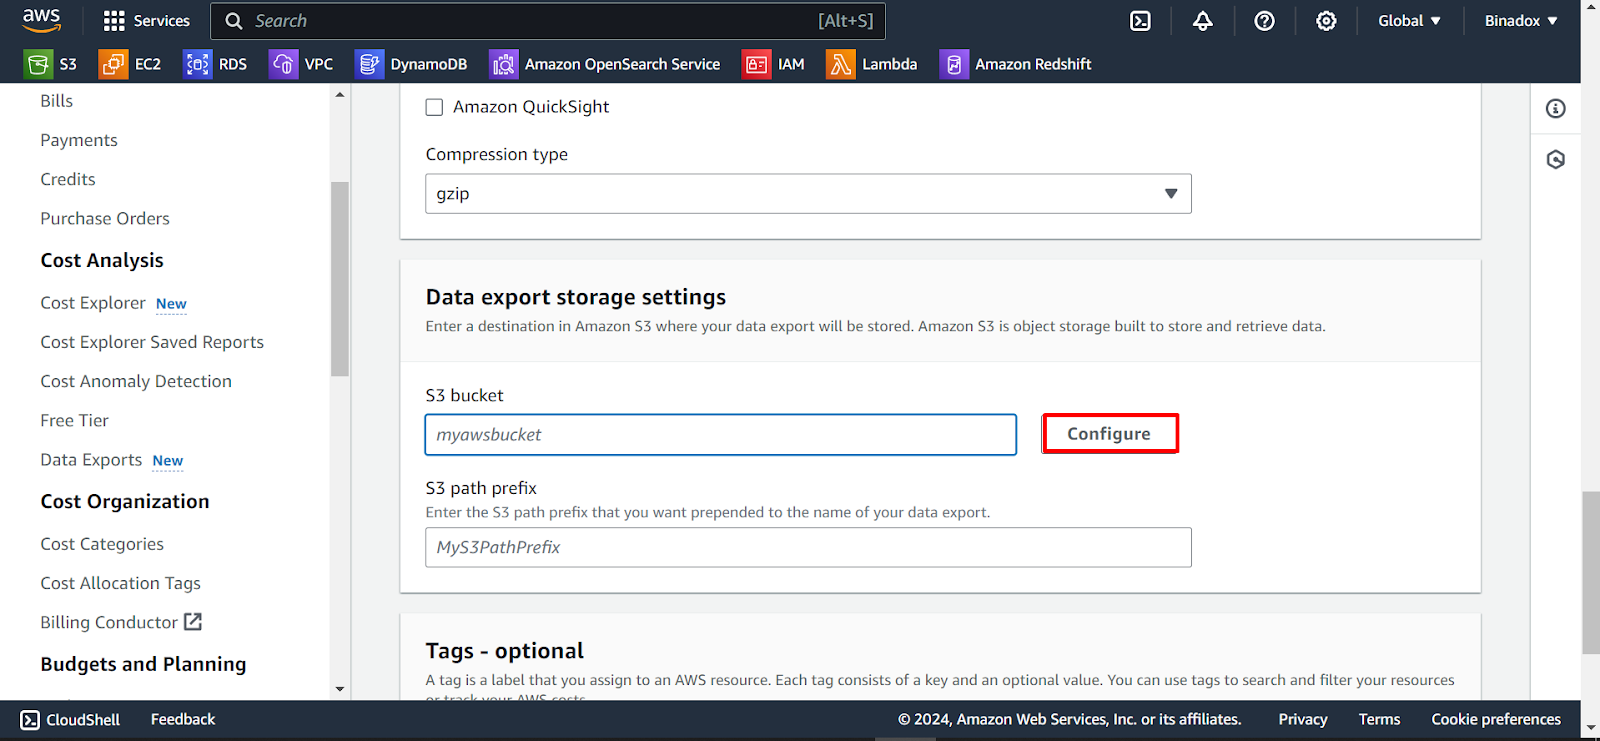 Data export storage settings